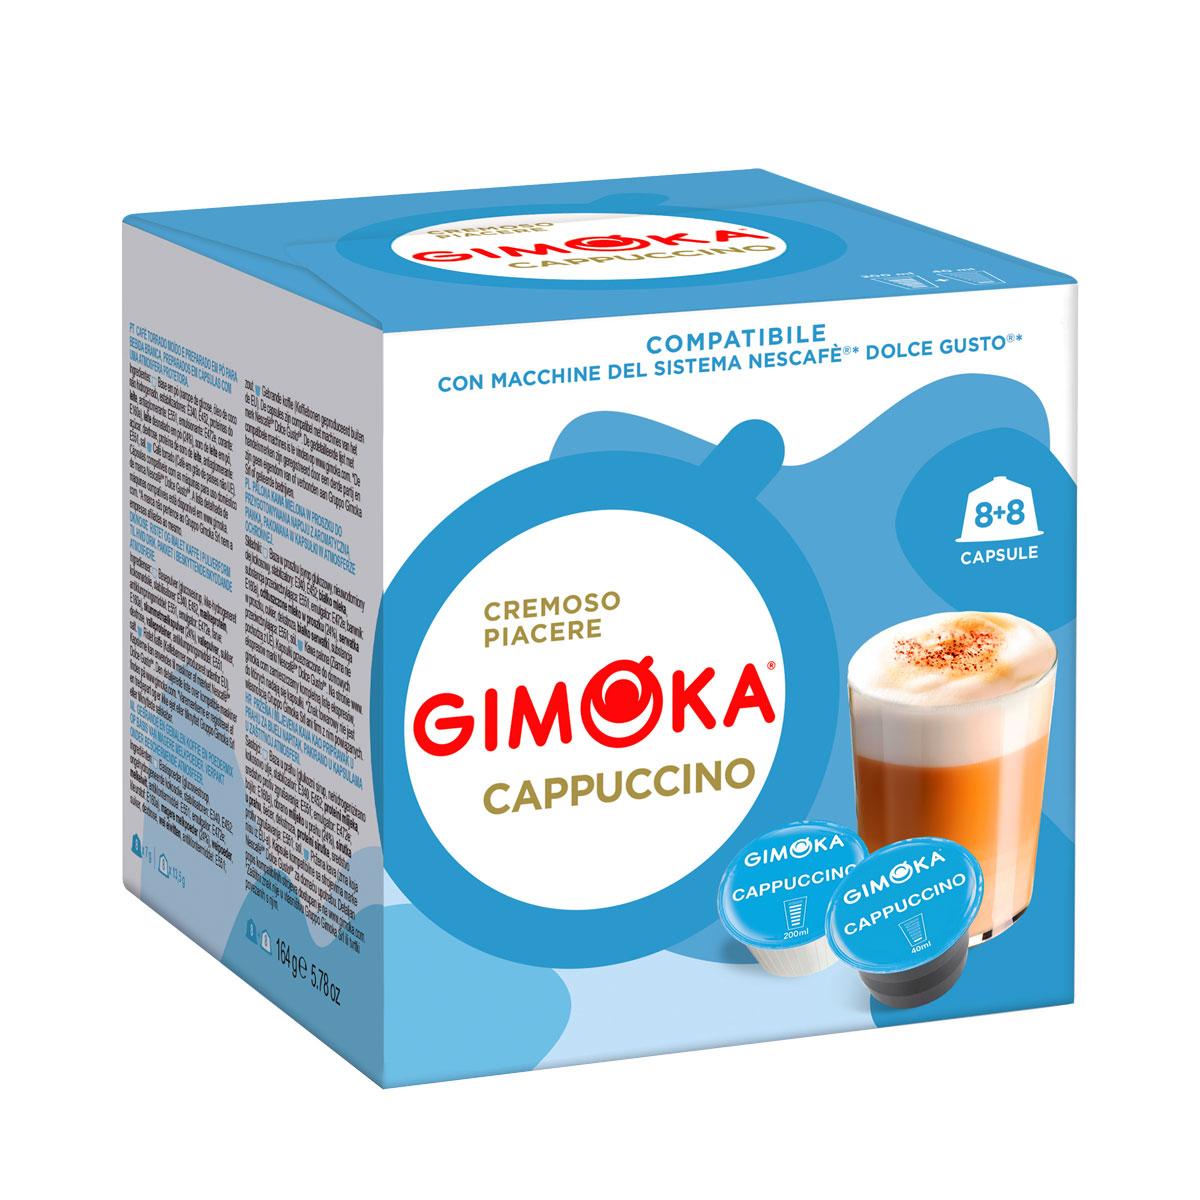 GIMOKA Kapsule za Dolce Gusto Cappuccino 8+8